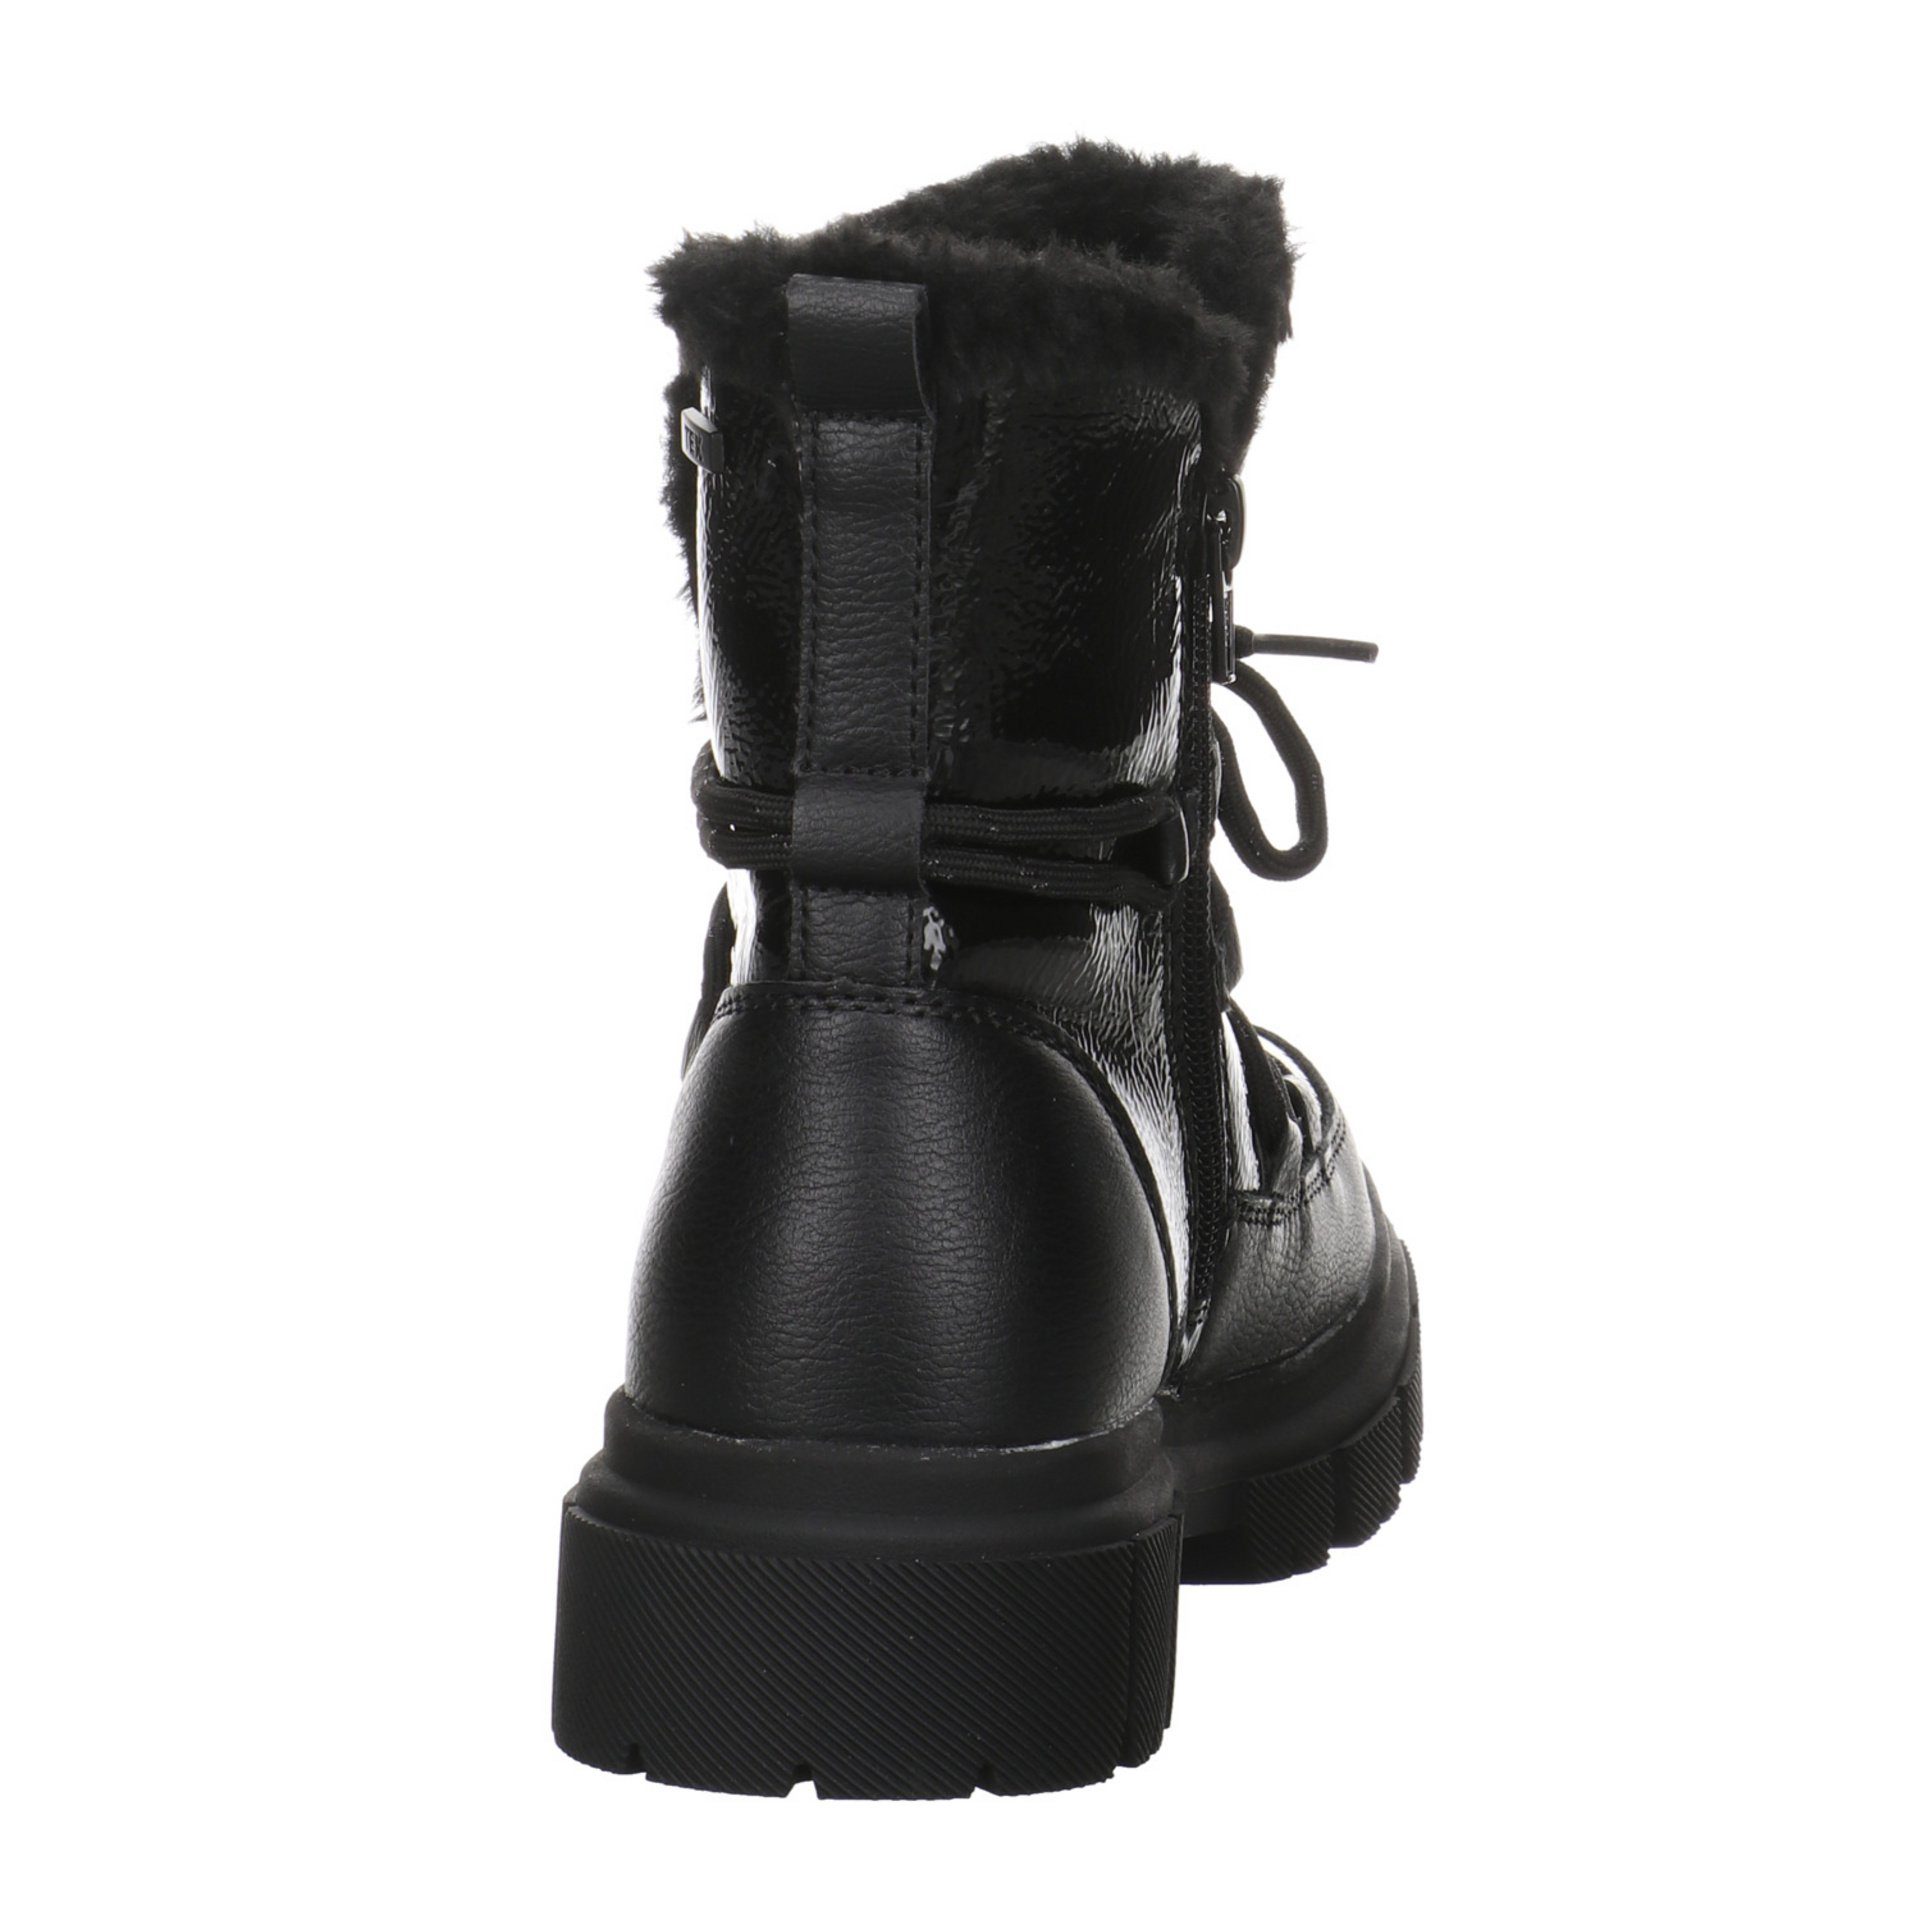 TOM TAILOR Kinderschuhe black Mädchen Stiefel Schuhe Stiefelette Boots Synthetikkombination